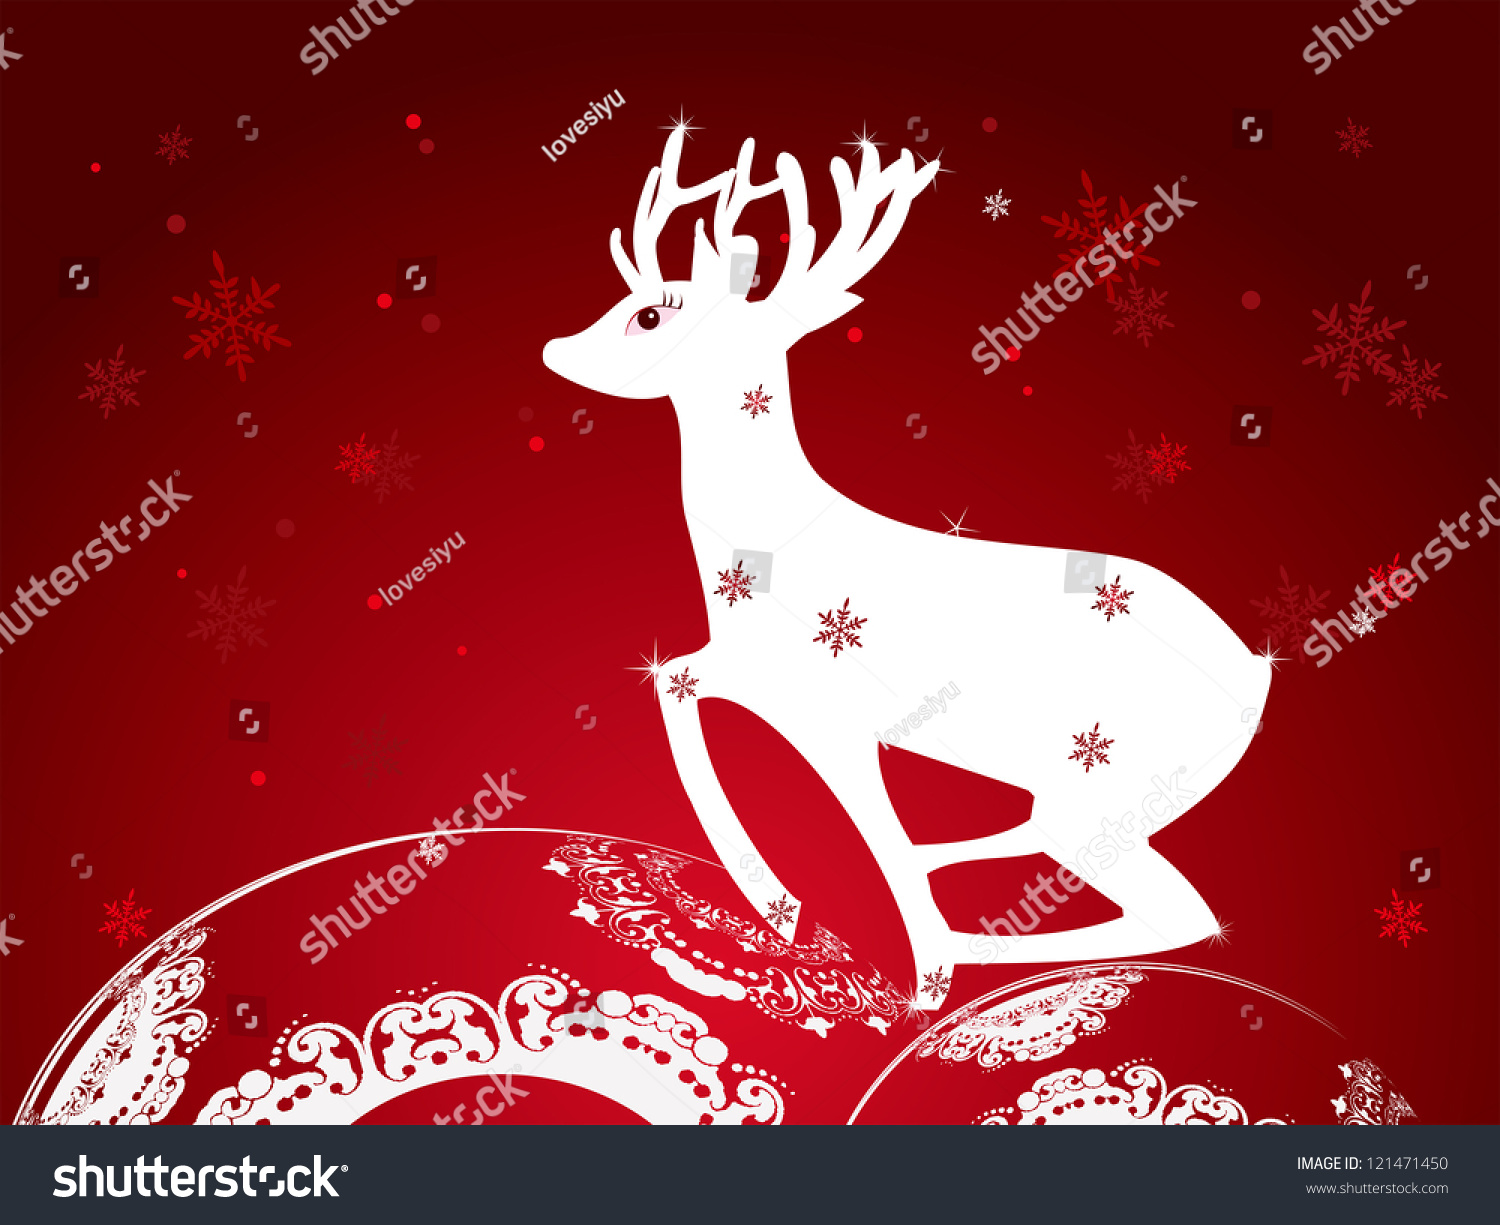 Edit Vectors Free Online - Christmas cards | Shutterstock Editor